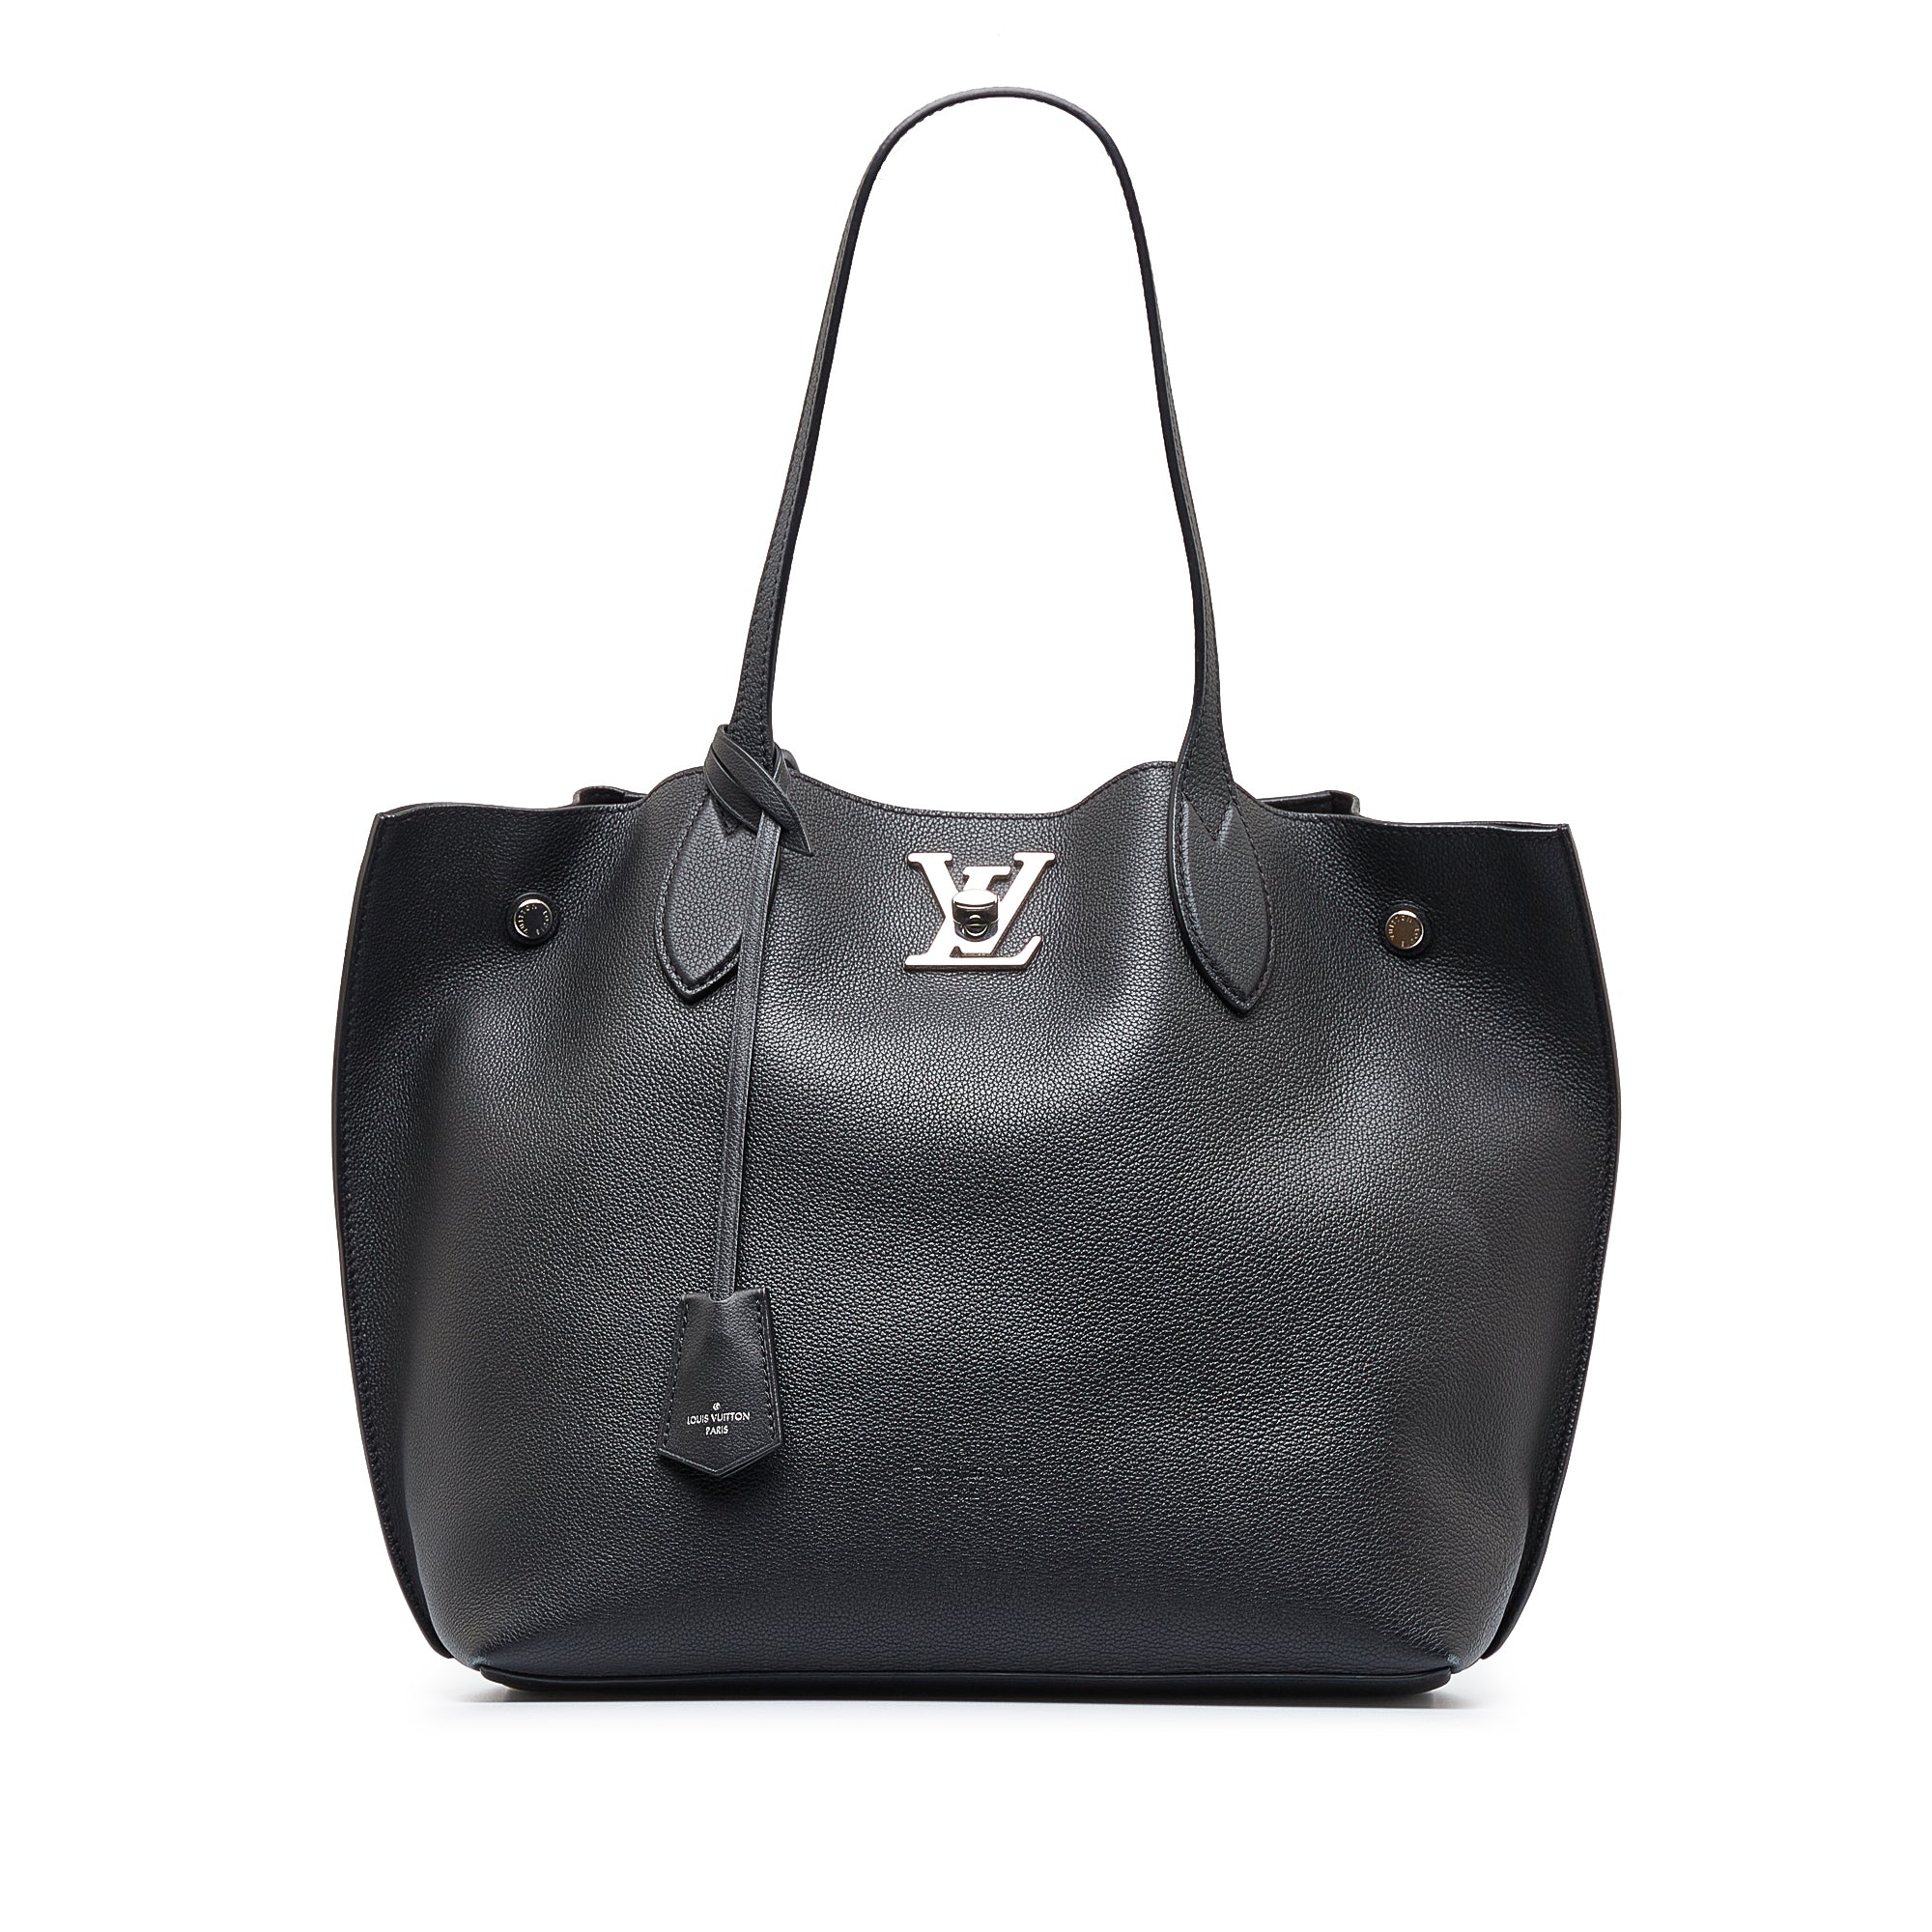 Louis Vuitton - Authenticated Lockme Handbag - Leather Black for Women, Very Good Condition